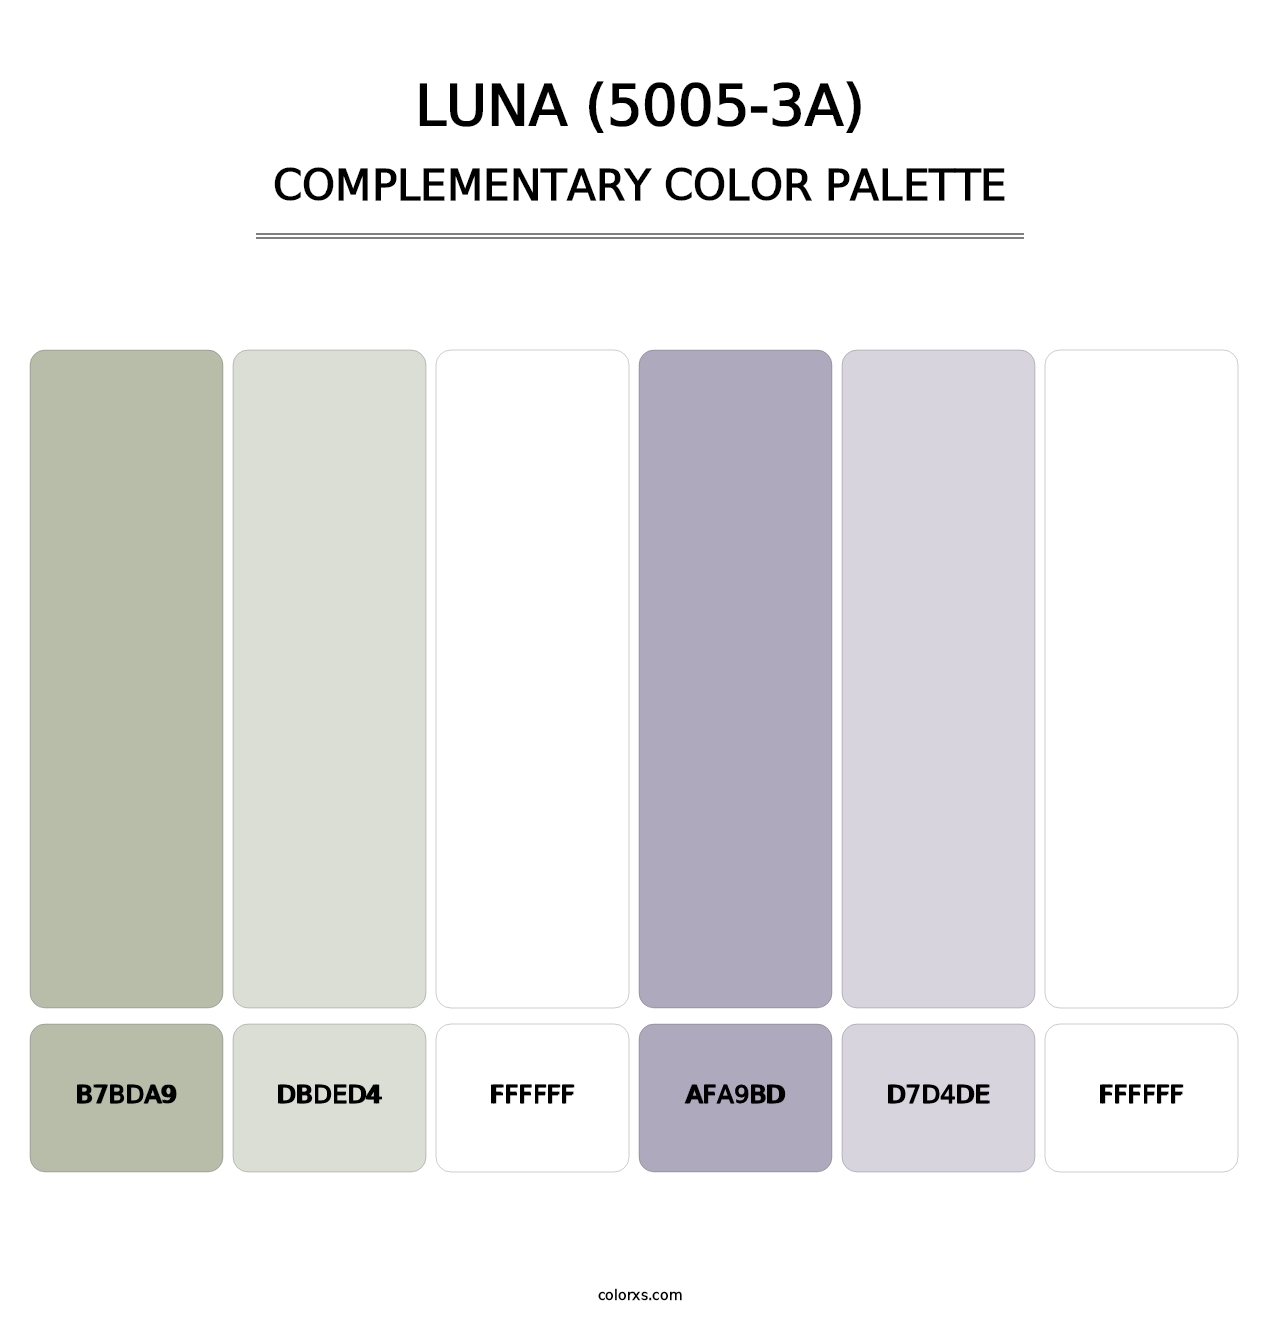 Luna (5005-3A) - Complementary Color Palette